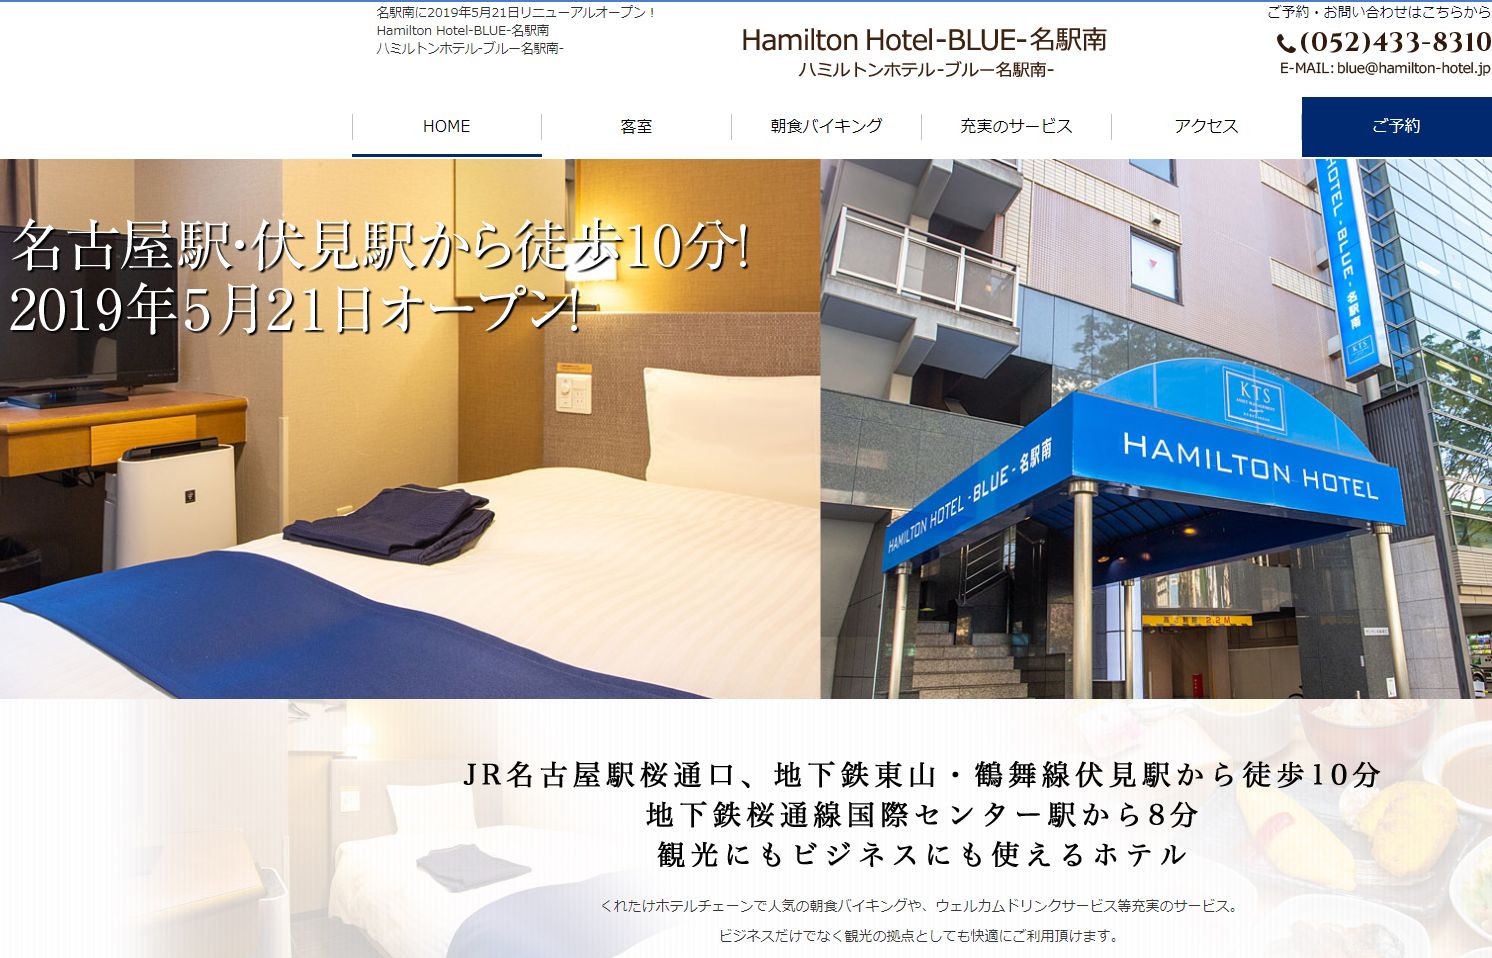 Hamilton Hotel-BLUE-名駅南